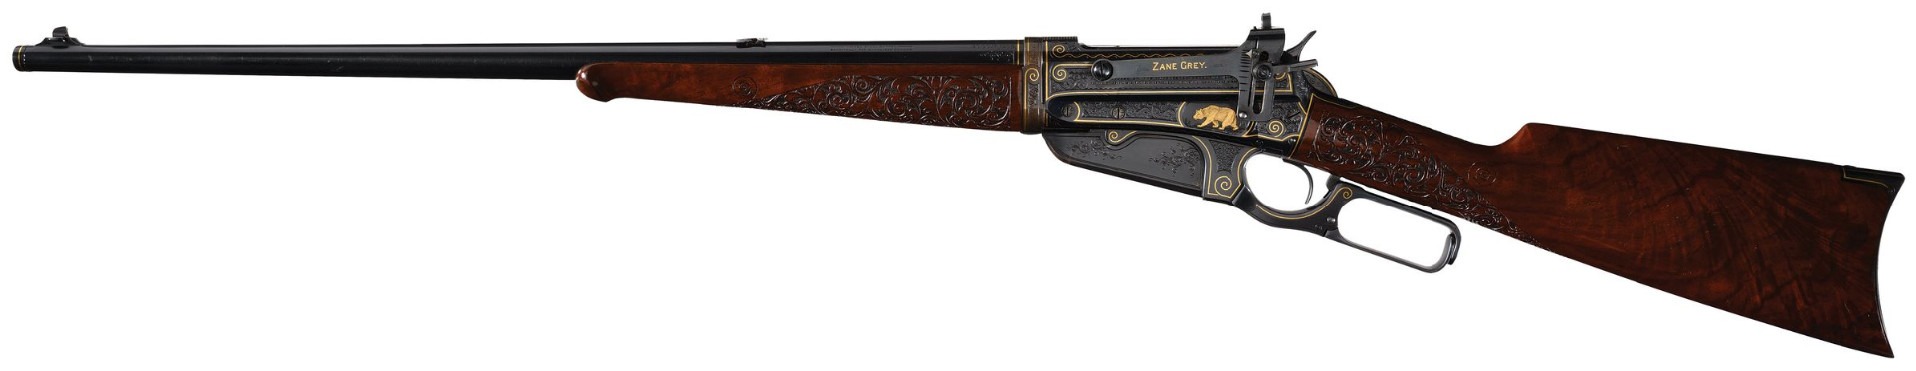 Zane Grey Winchester M1895 sporting rifle